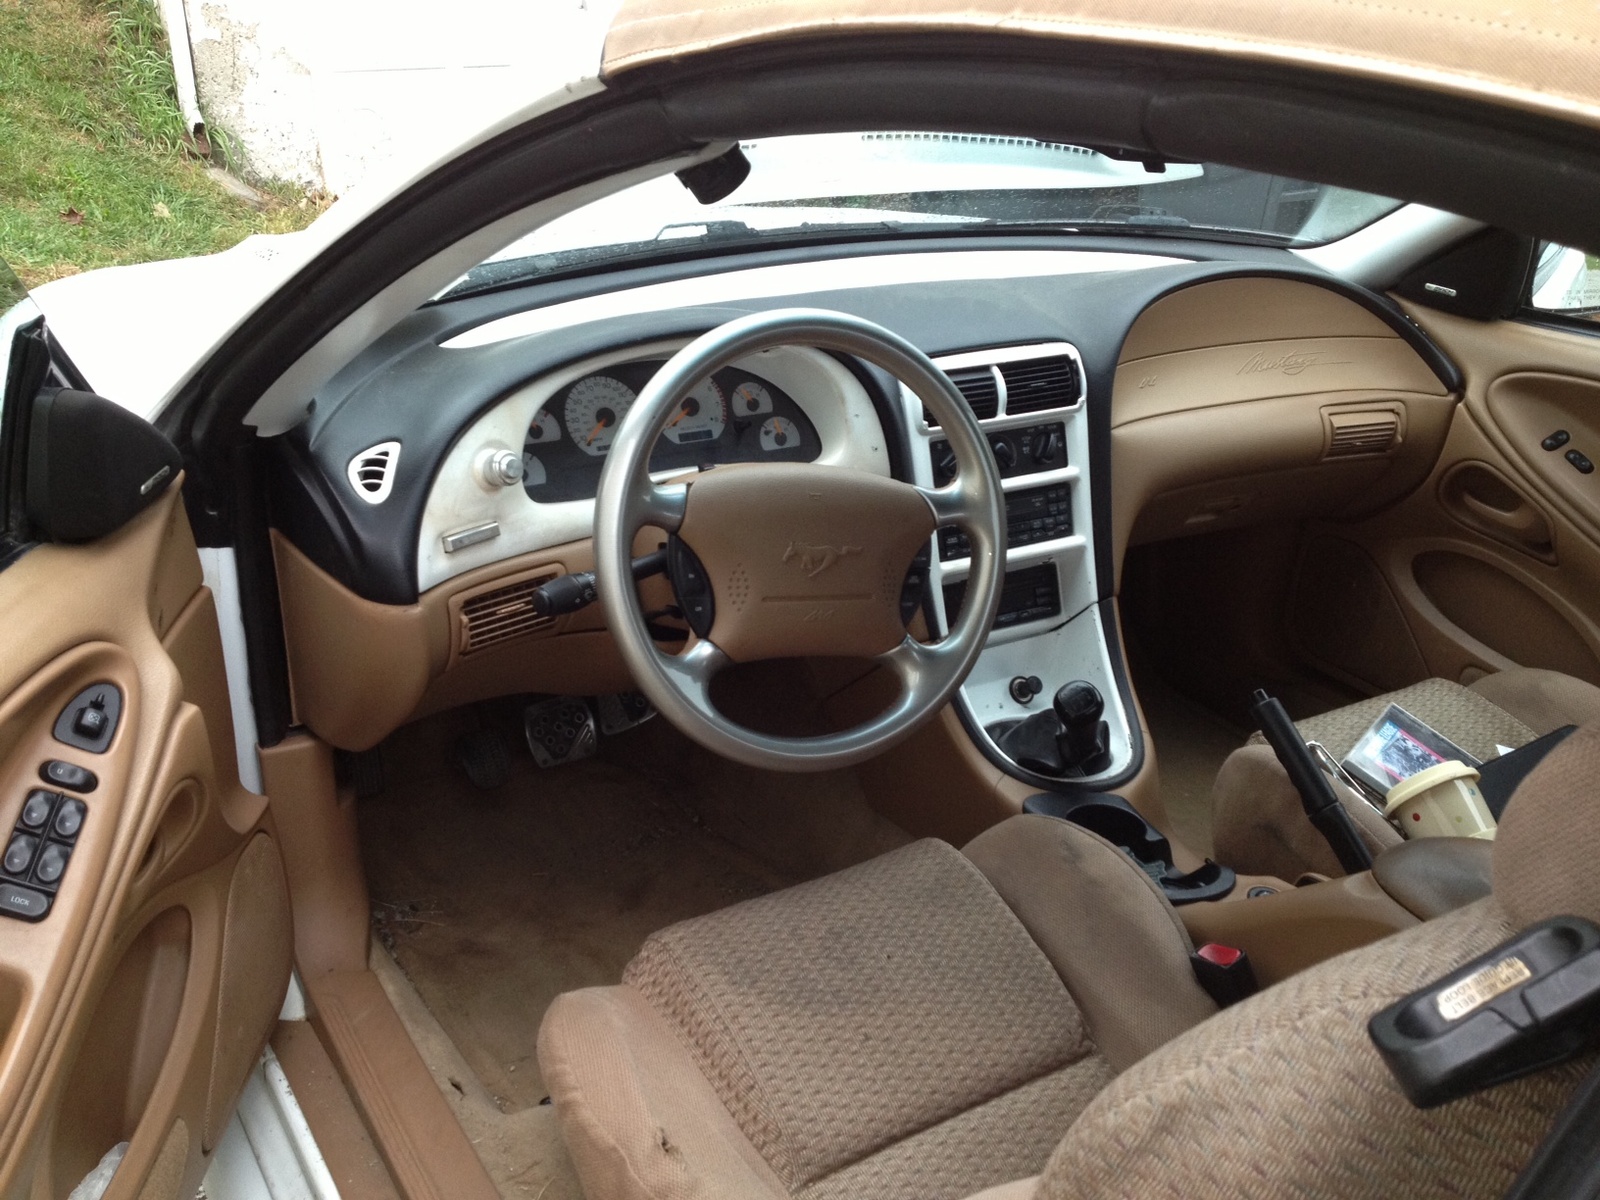 1998 Ford mustang convertible interior #7